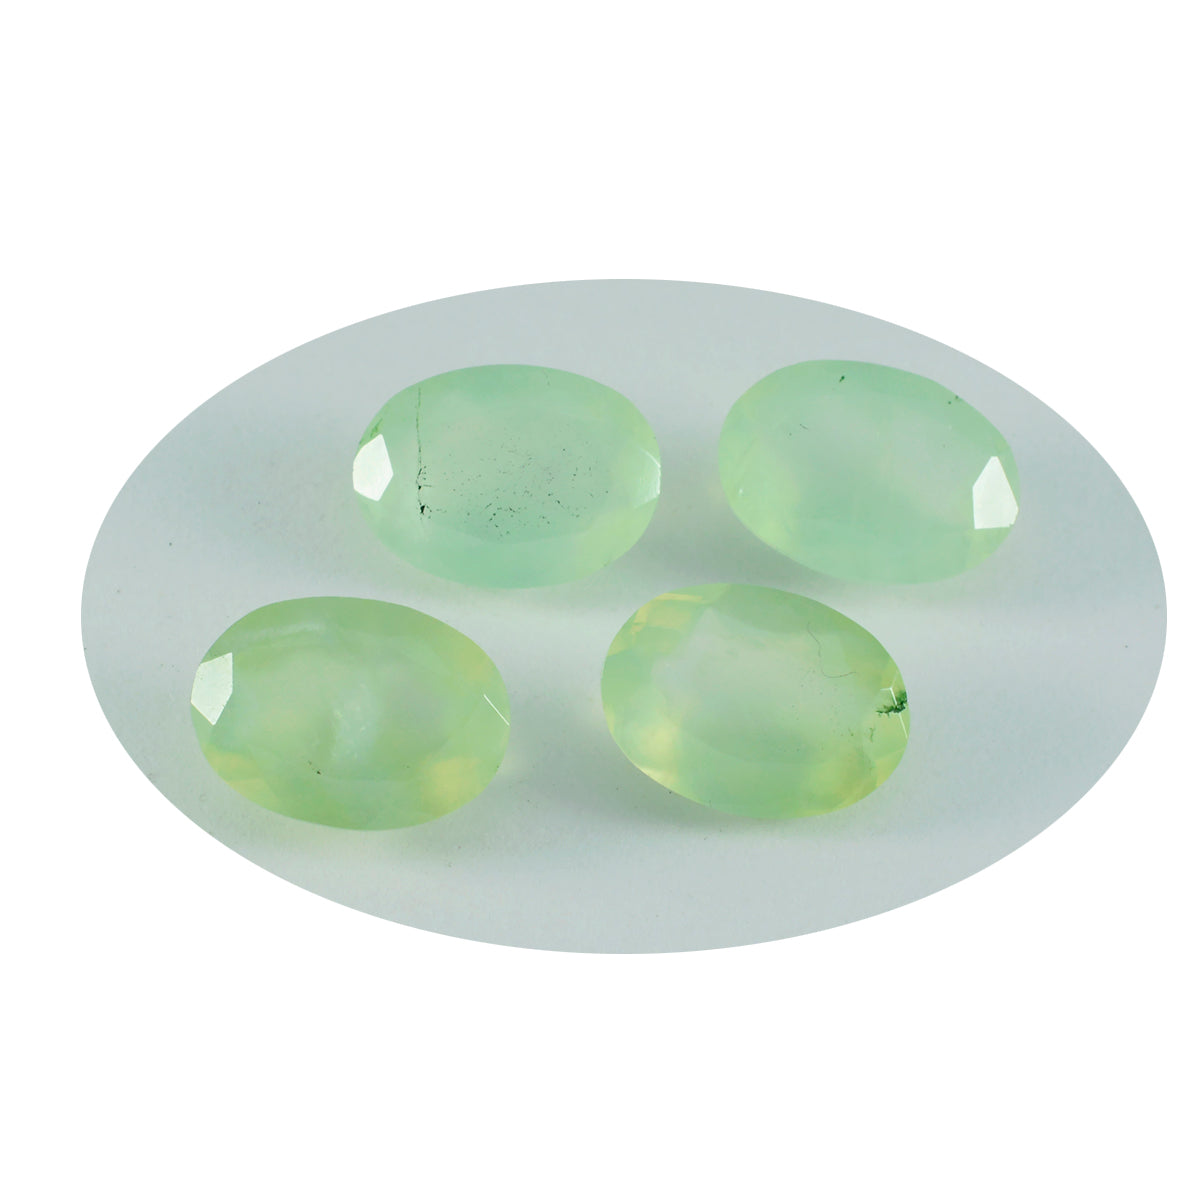 Riyogems 1PC groen prehniet gefacetteerd 10x12 mm ovale vorm uitstekende kwaliteit edelsteen